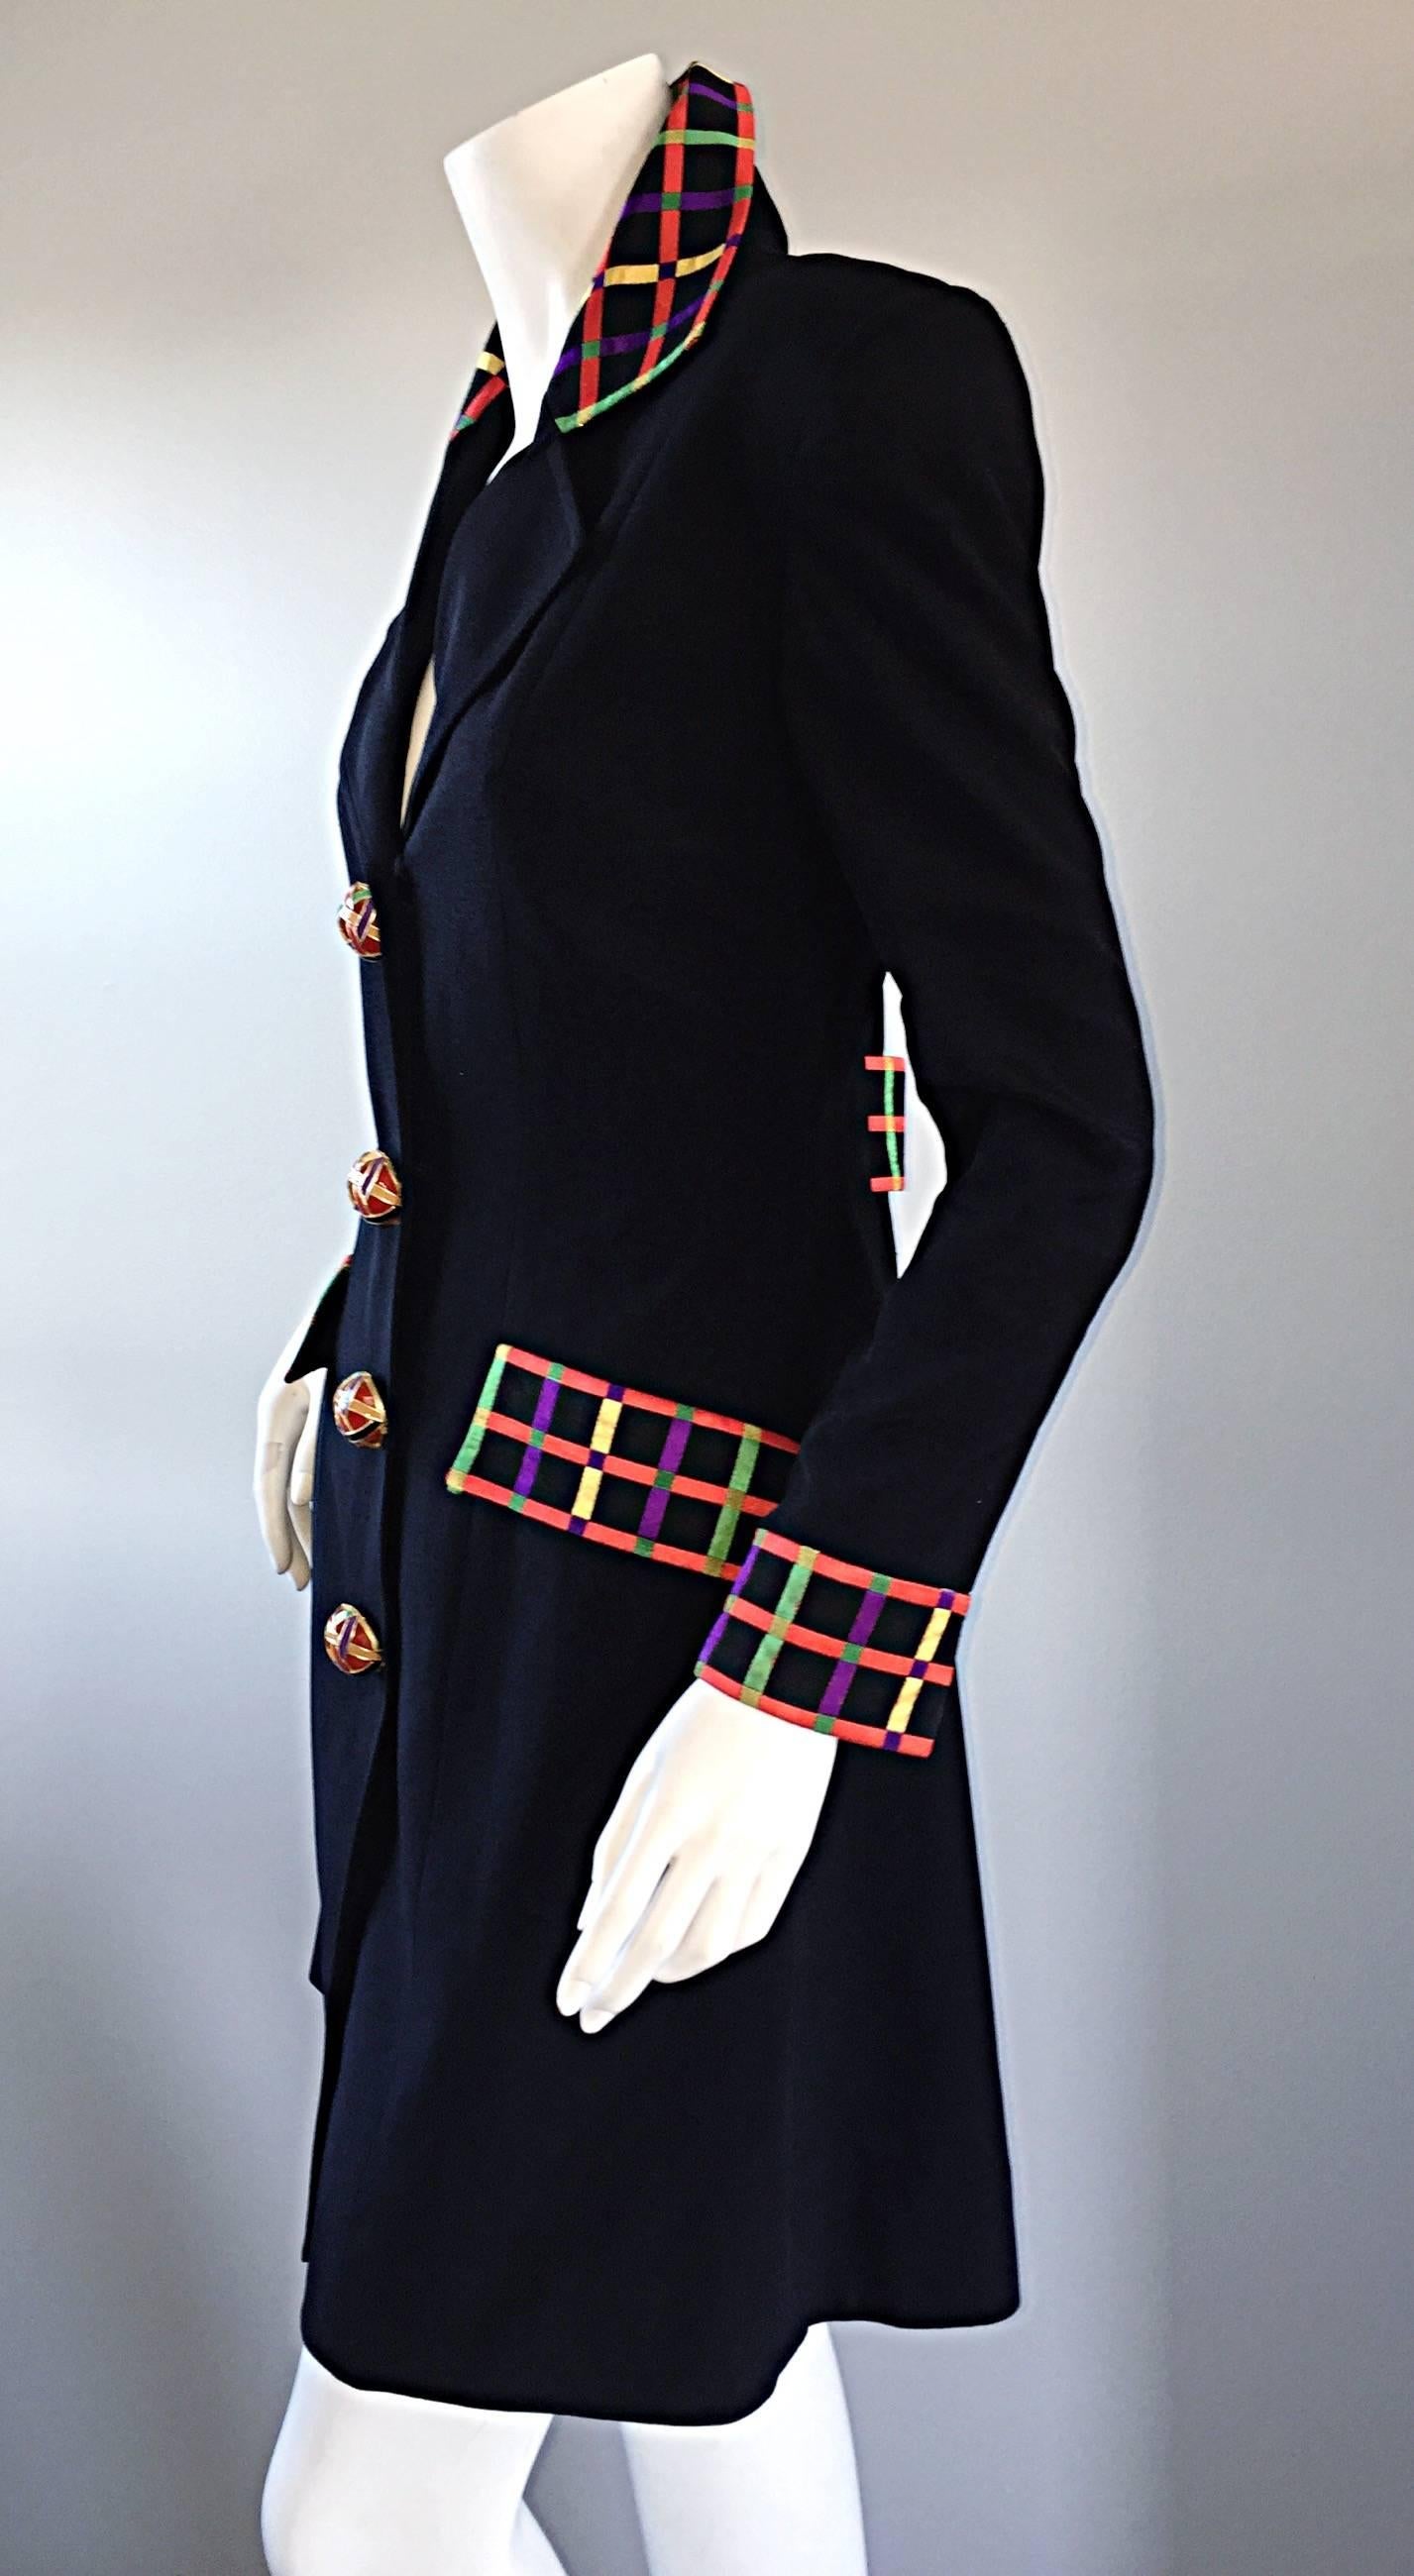 Vintage Kathryn Dianos Black Jacket Dress w/ Plaid Details + Dome Buttons 3